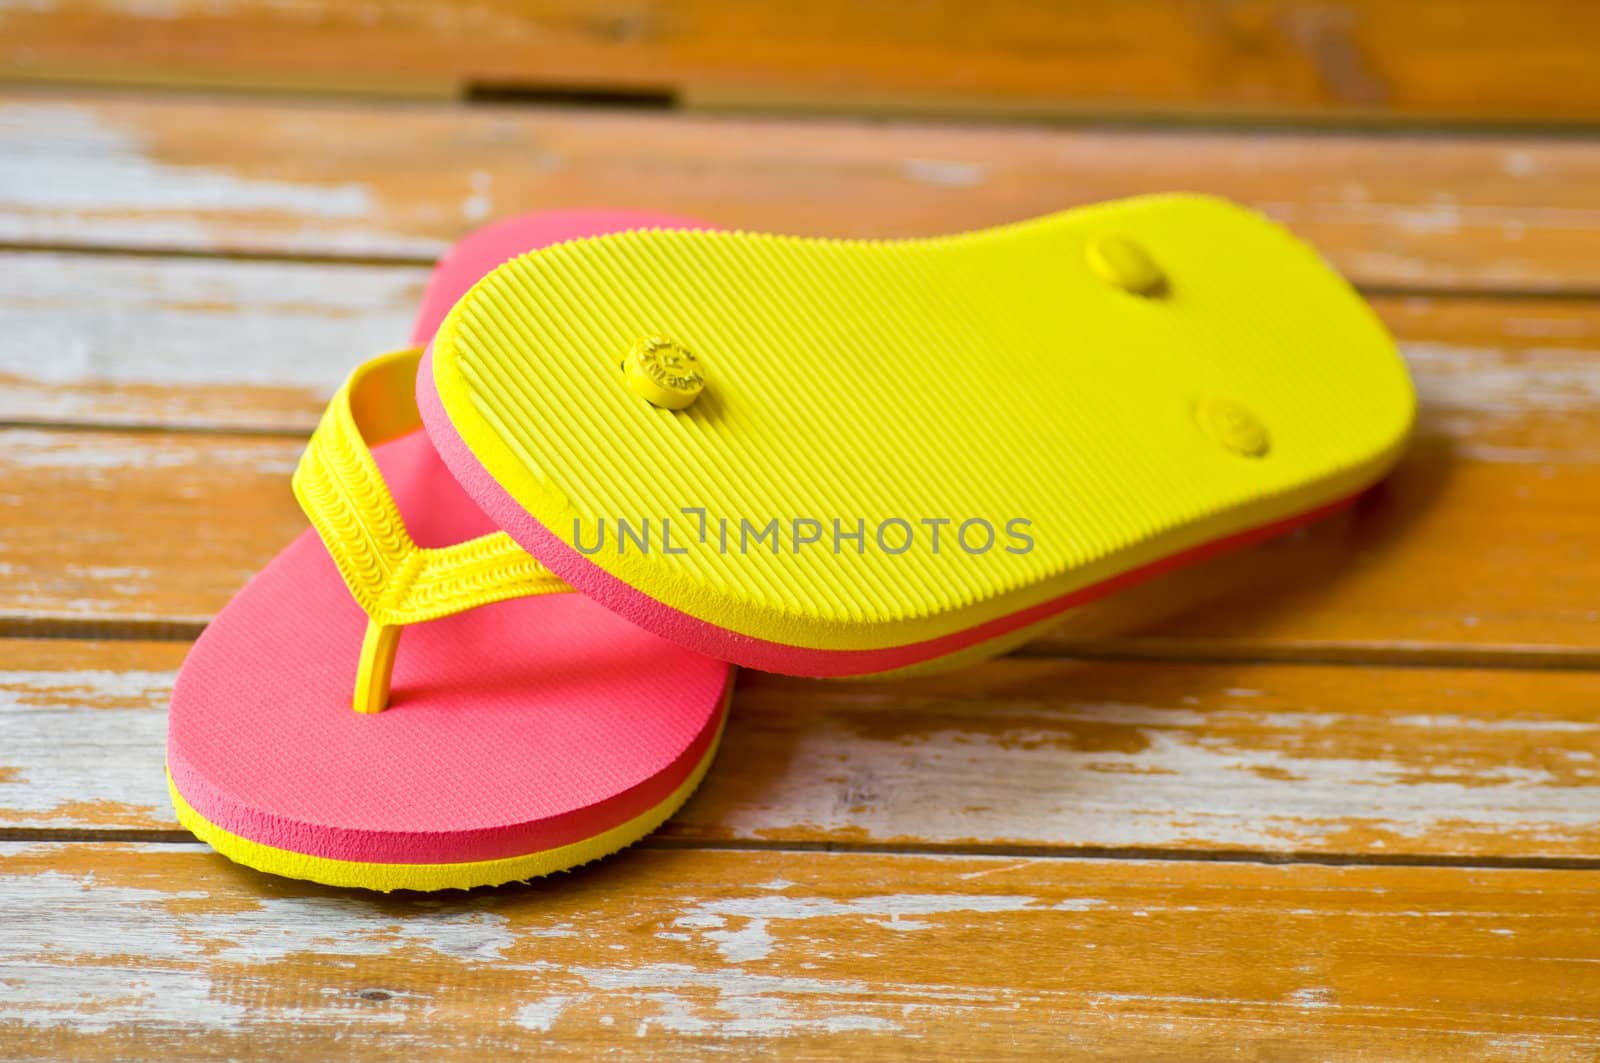 Pink and yellow slipper by buffaloboy